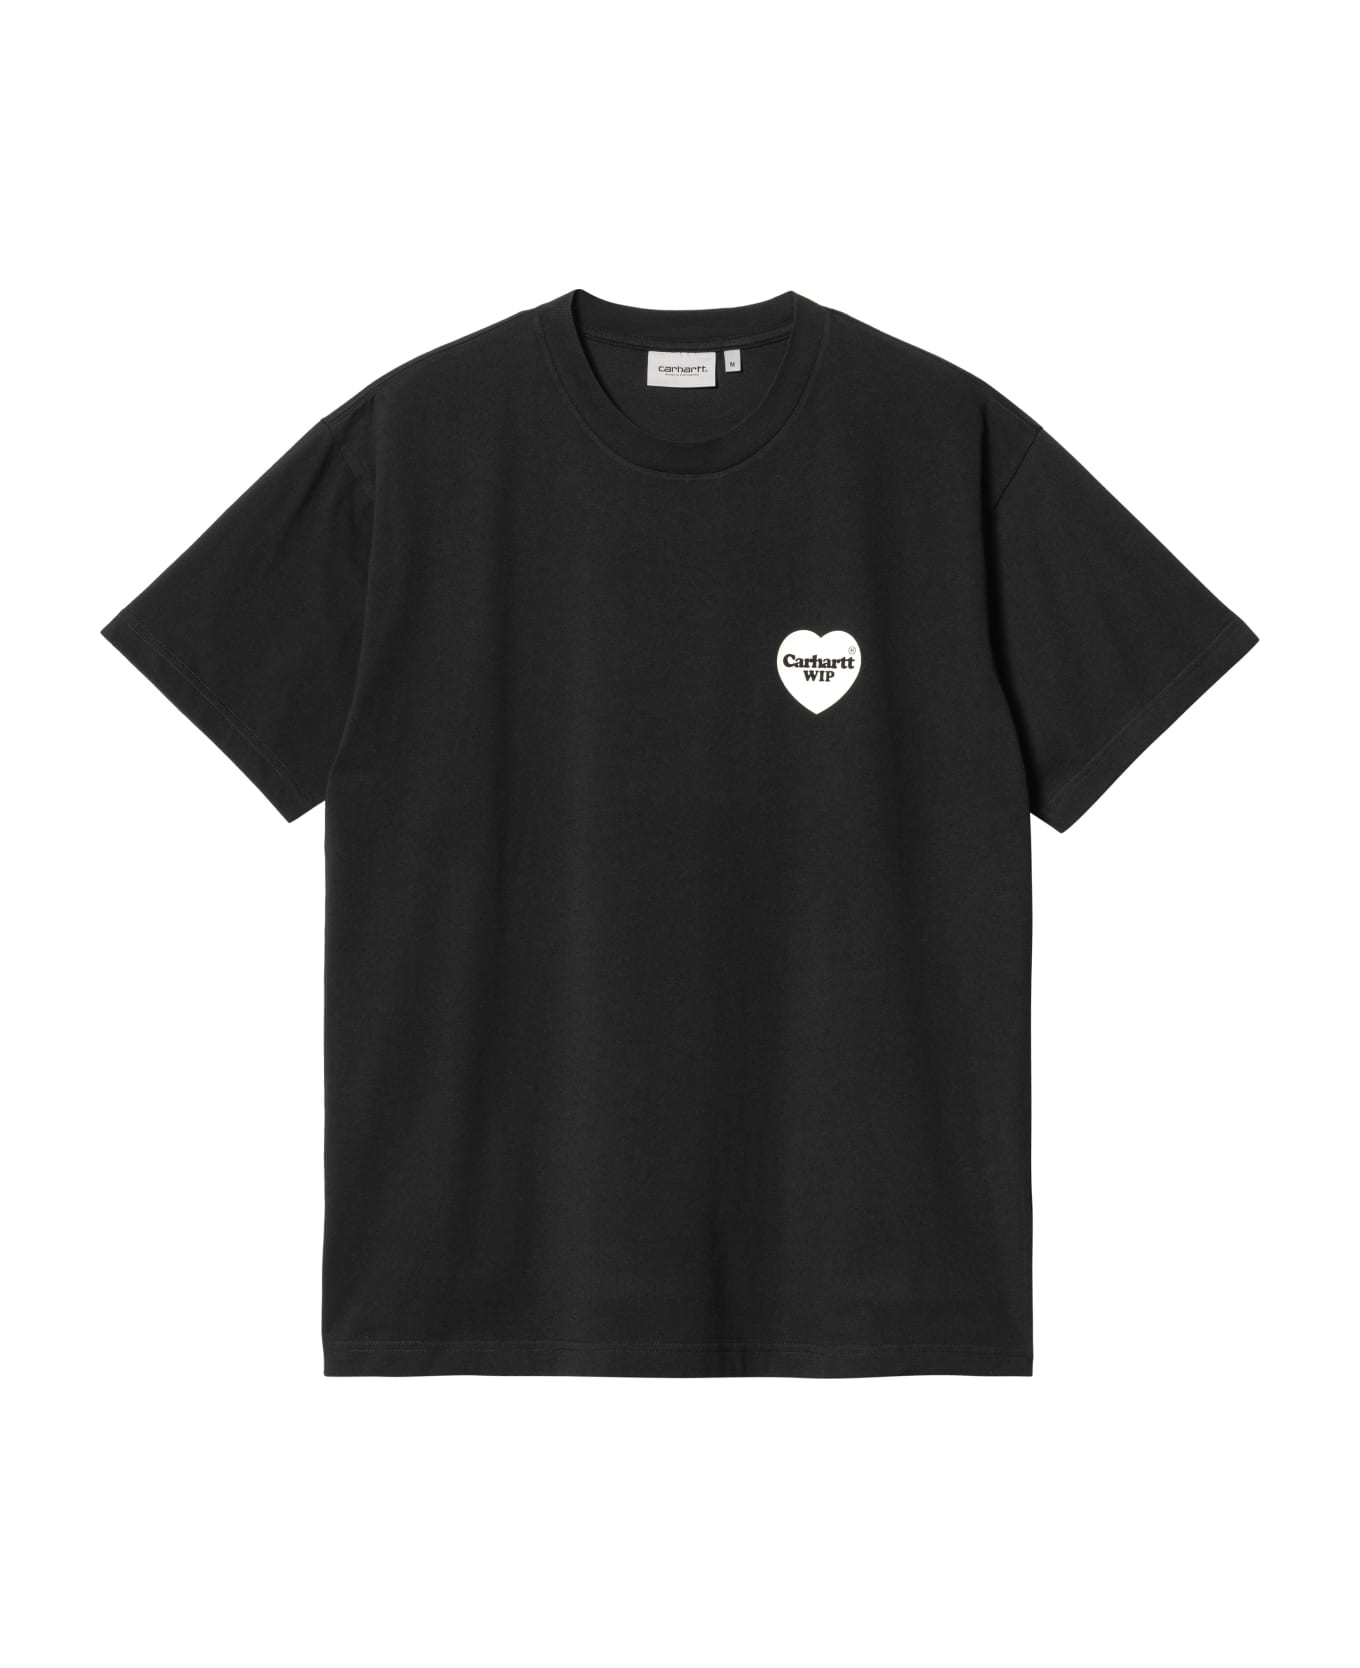 Carhartt S S Heart Bandana T-shirt - Black White